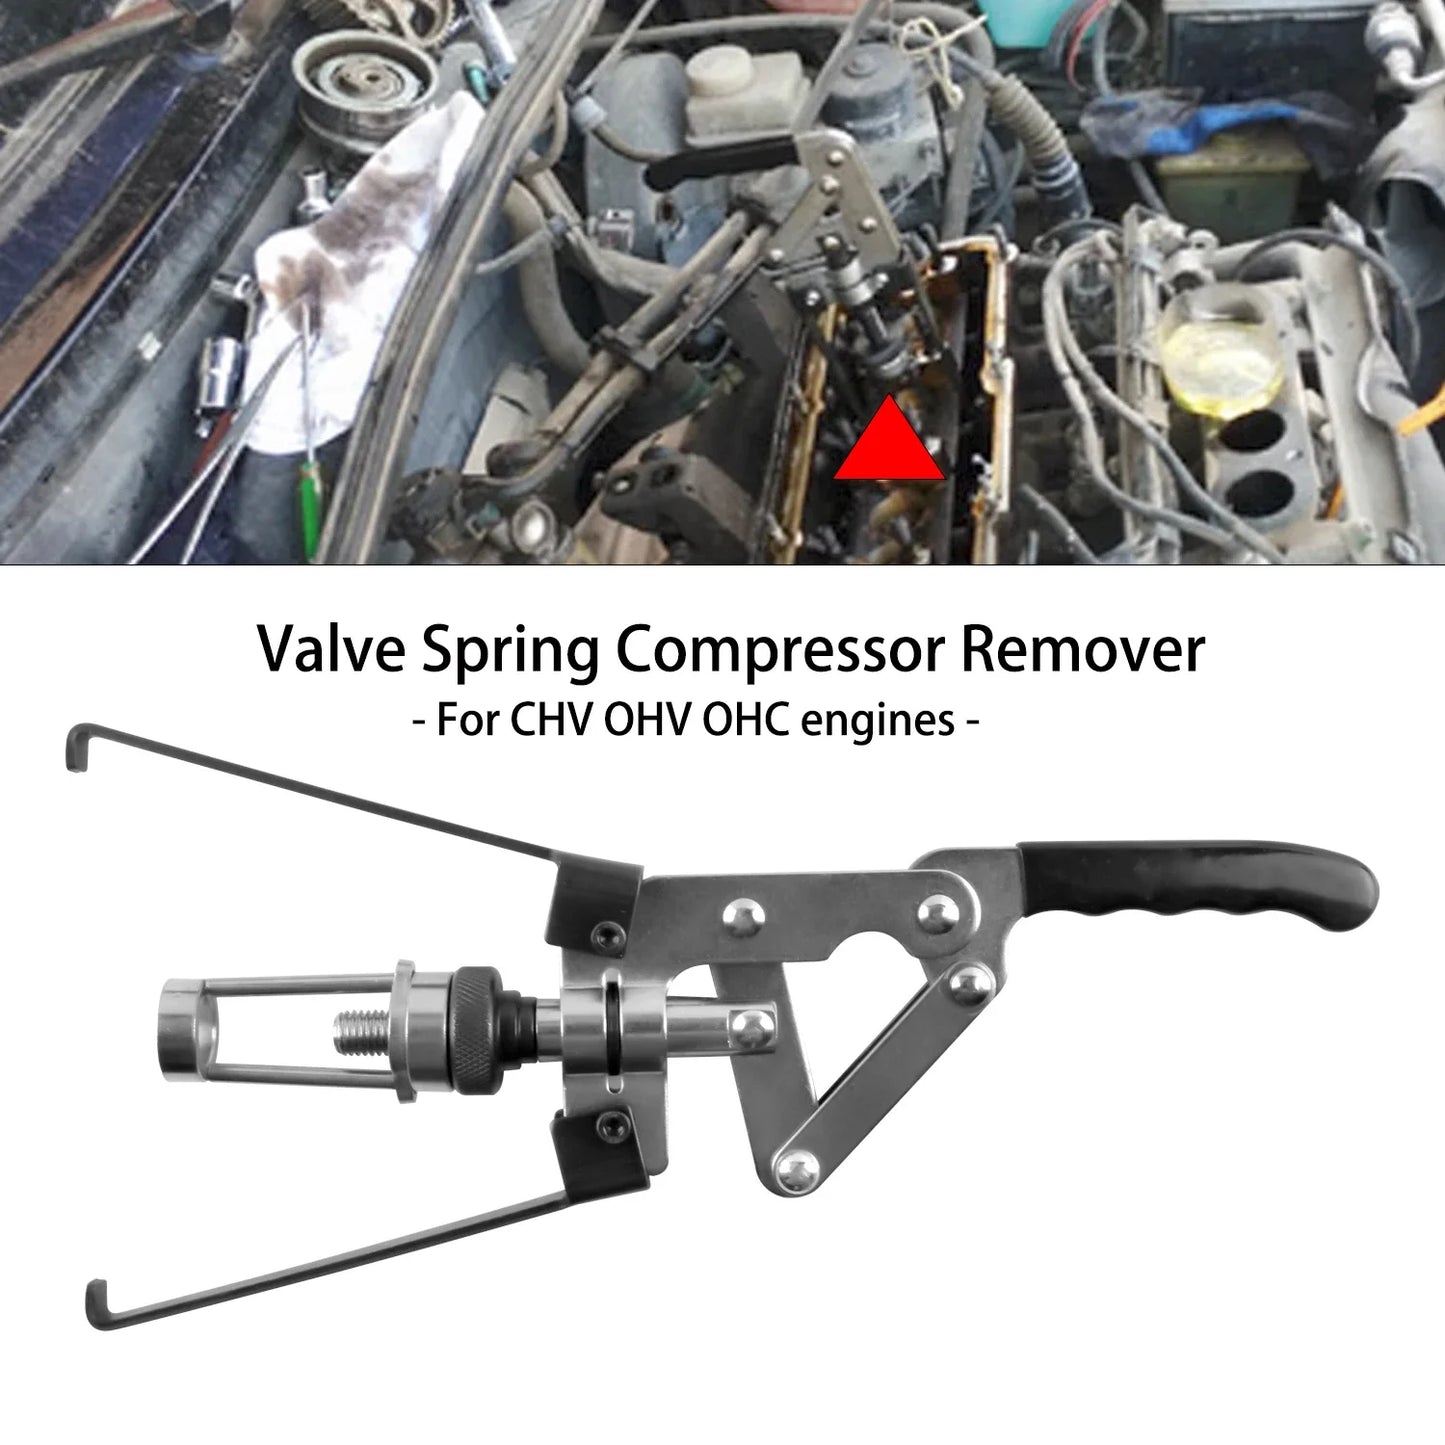 Universal Overhead Valve Spring Compressor Remover Installer Tool For CHV OHV OHC Engines